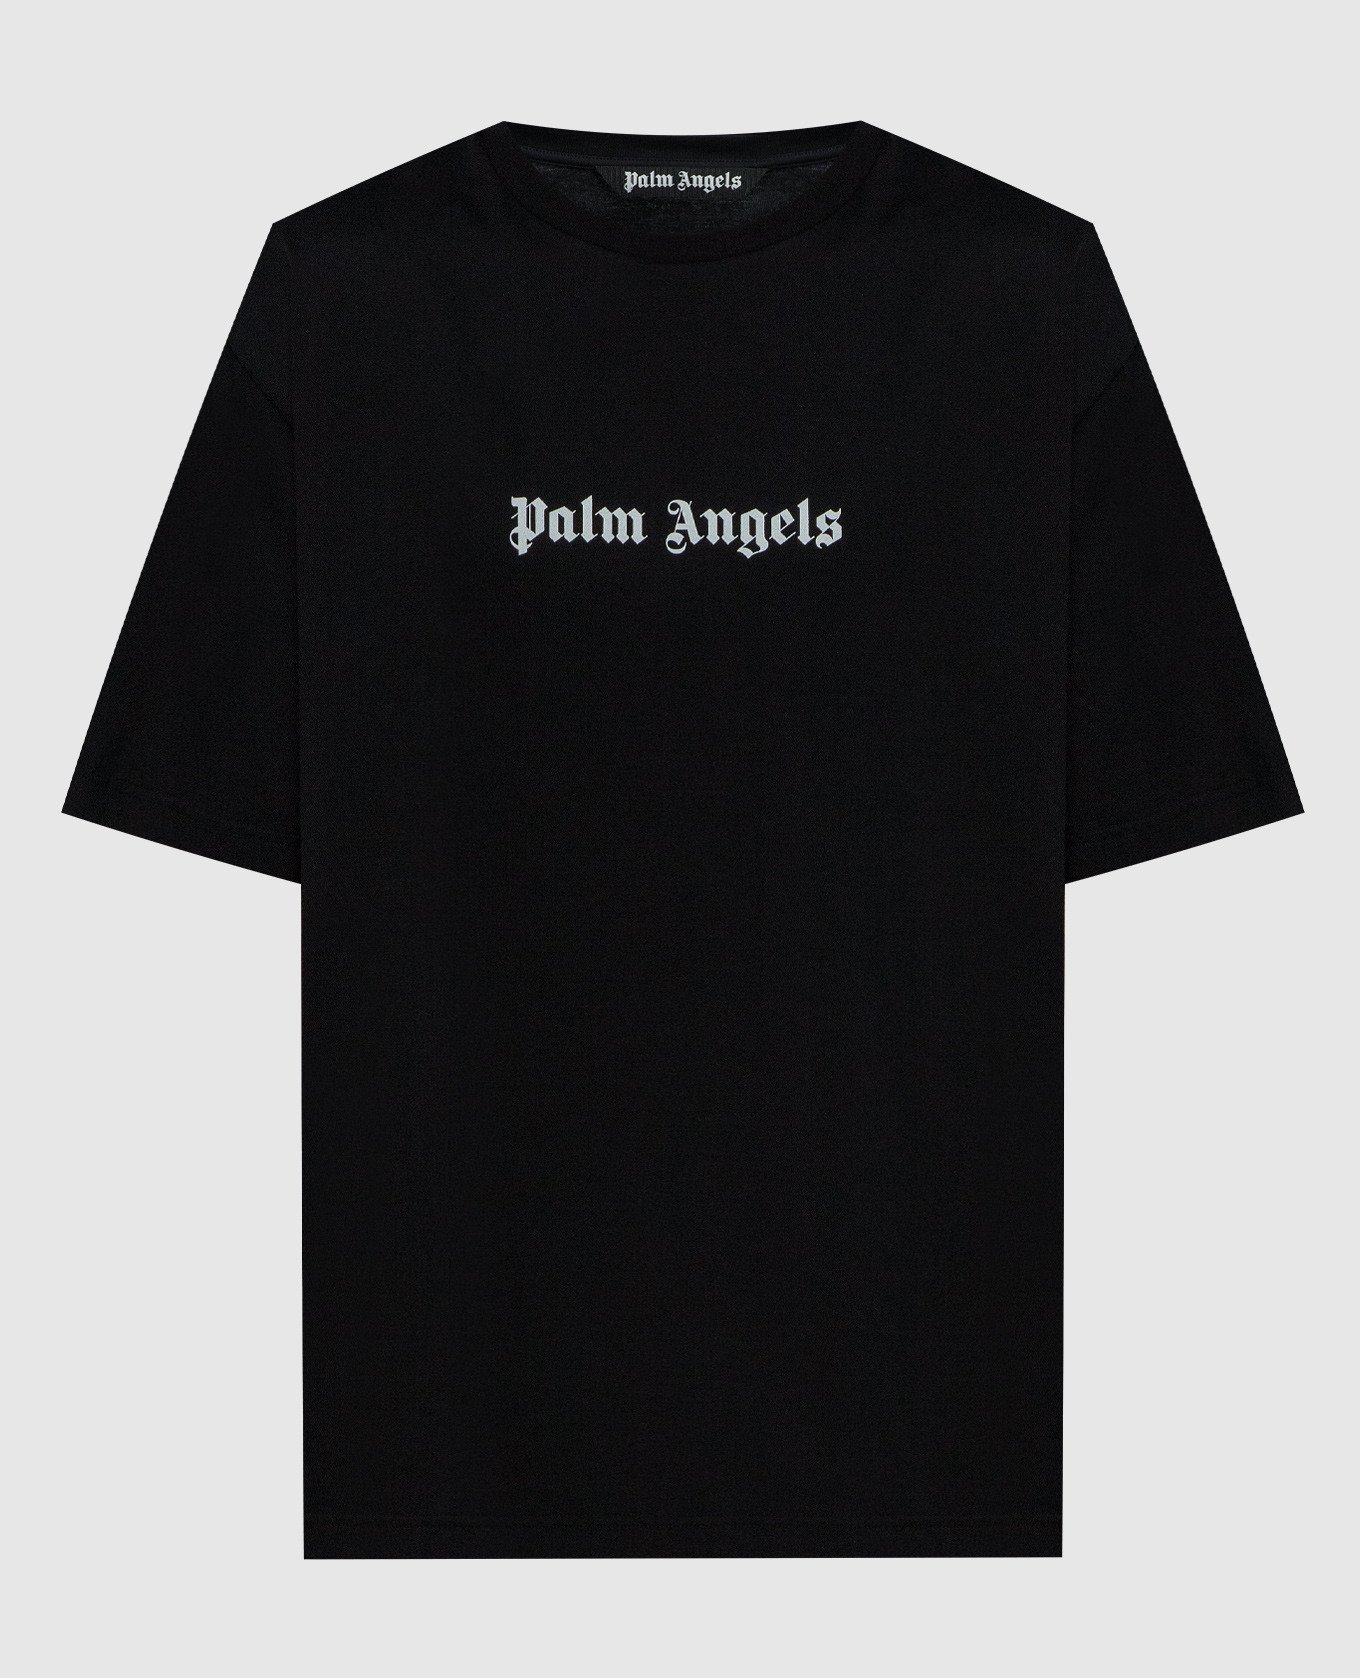 Black t-shirt with contrasting logo print